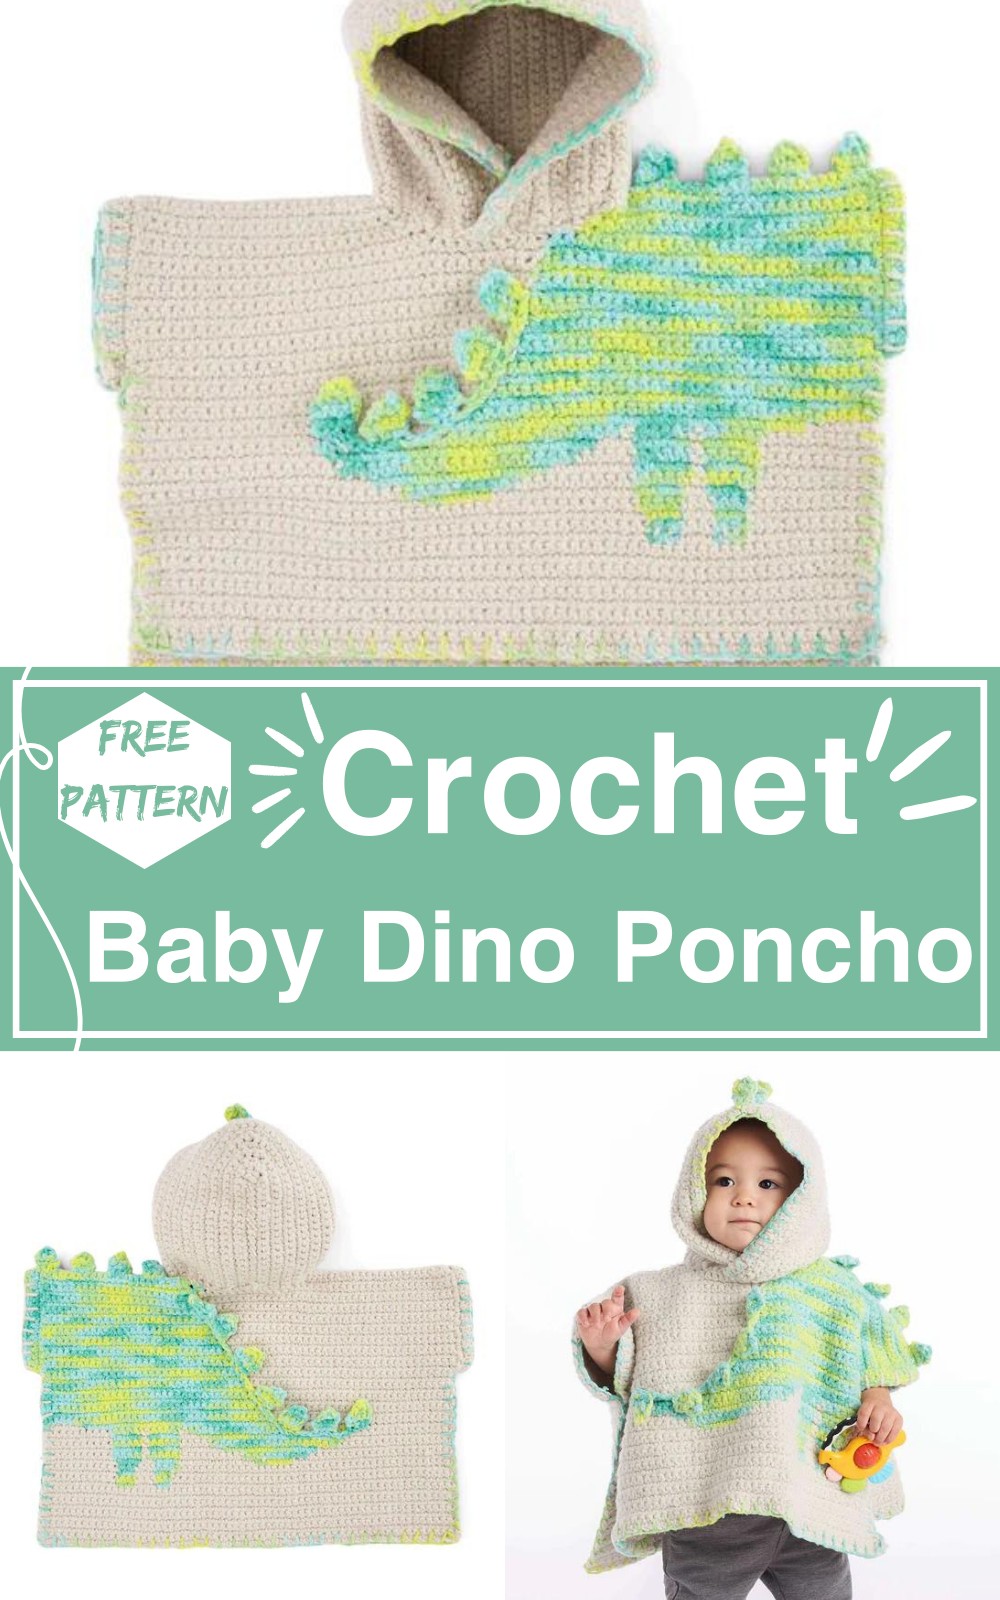 Crochet Baby Dino Poncho